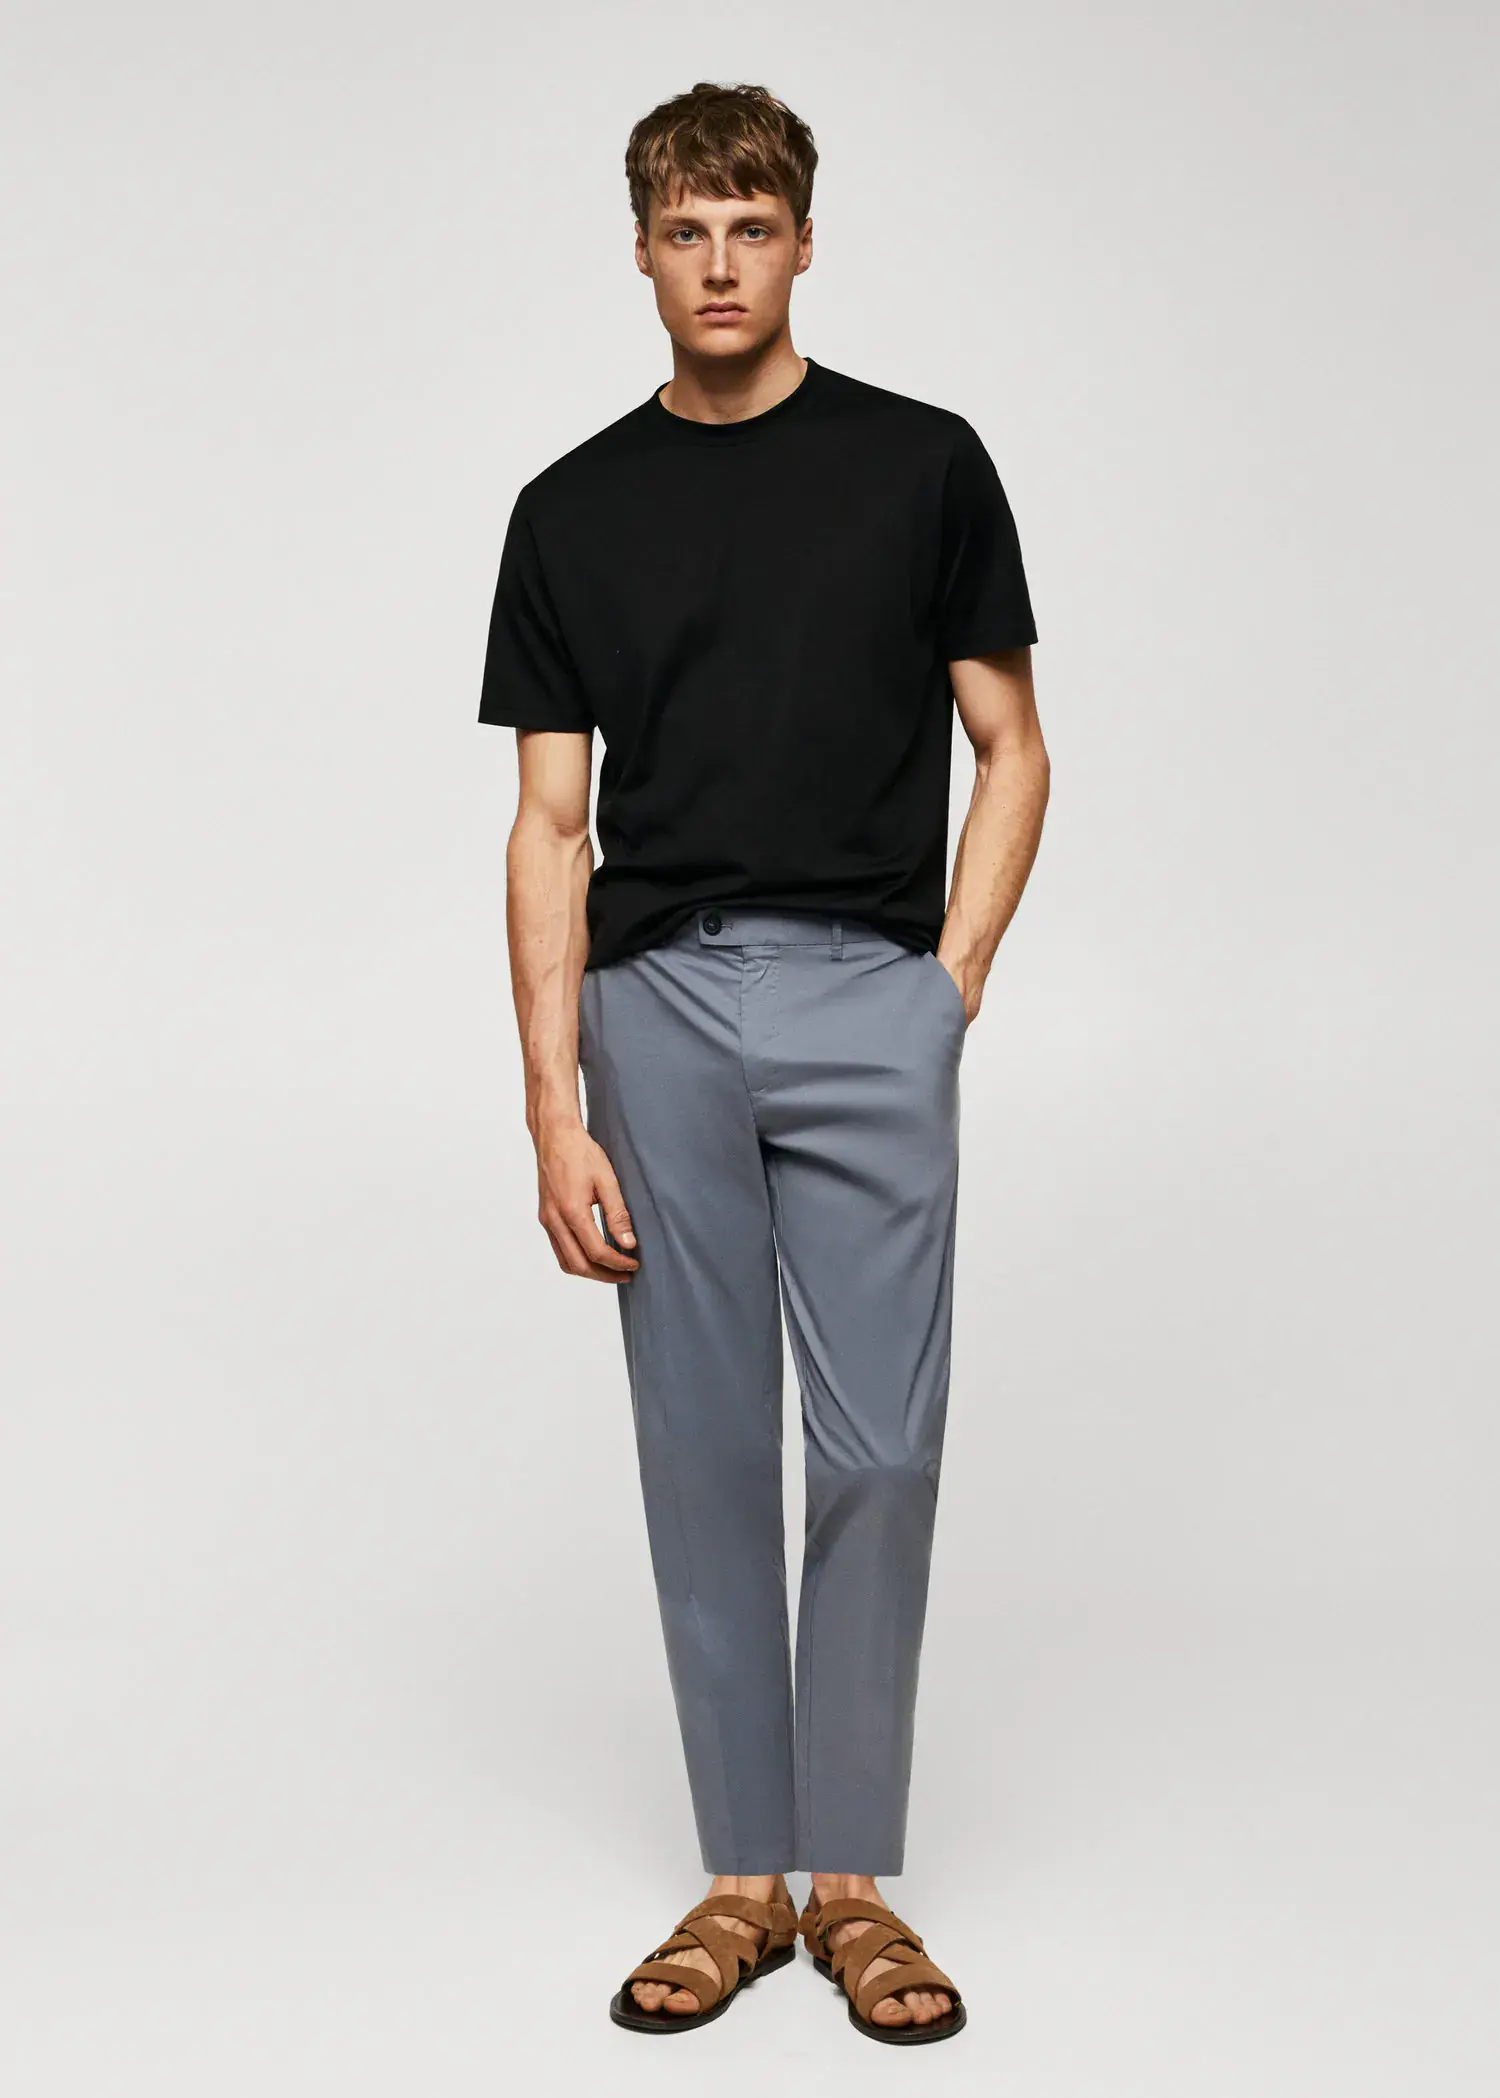 Mango Mercerised regular-fit t-shirt. a man in a black shirt and gray pants. 